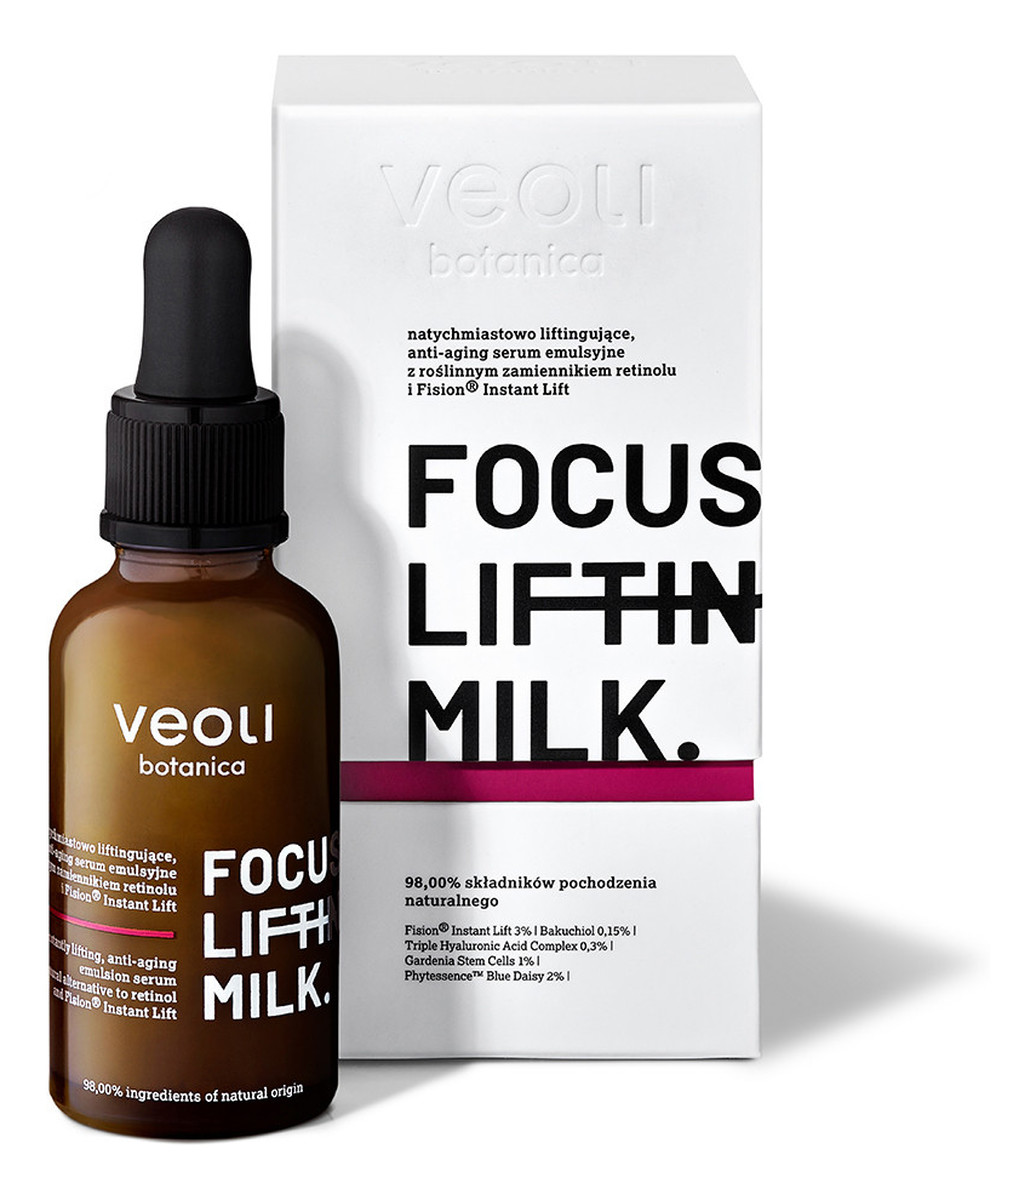 Focus lifting milk liftingujące serum emulsyjne do twarzy z bakuchiolem